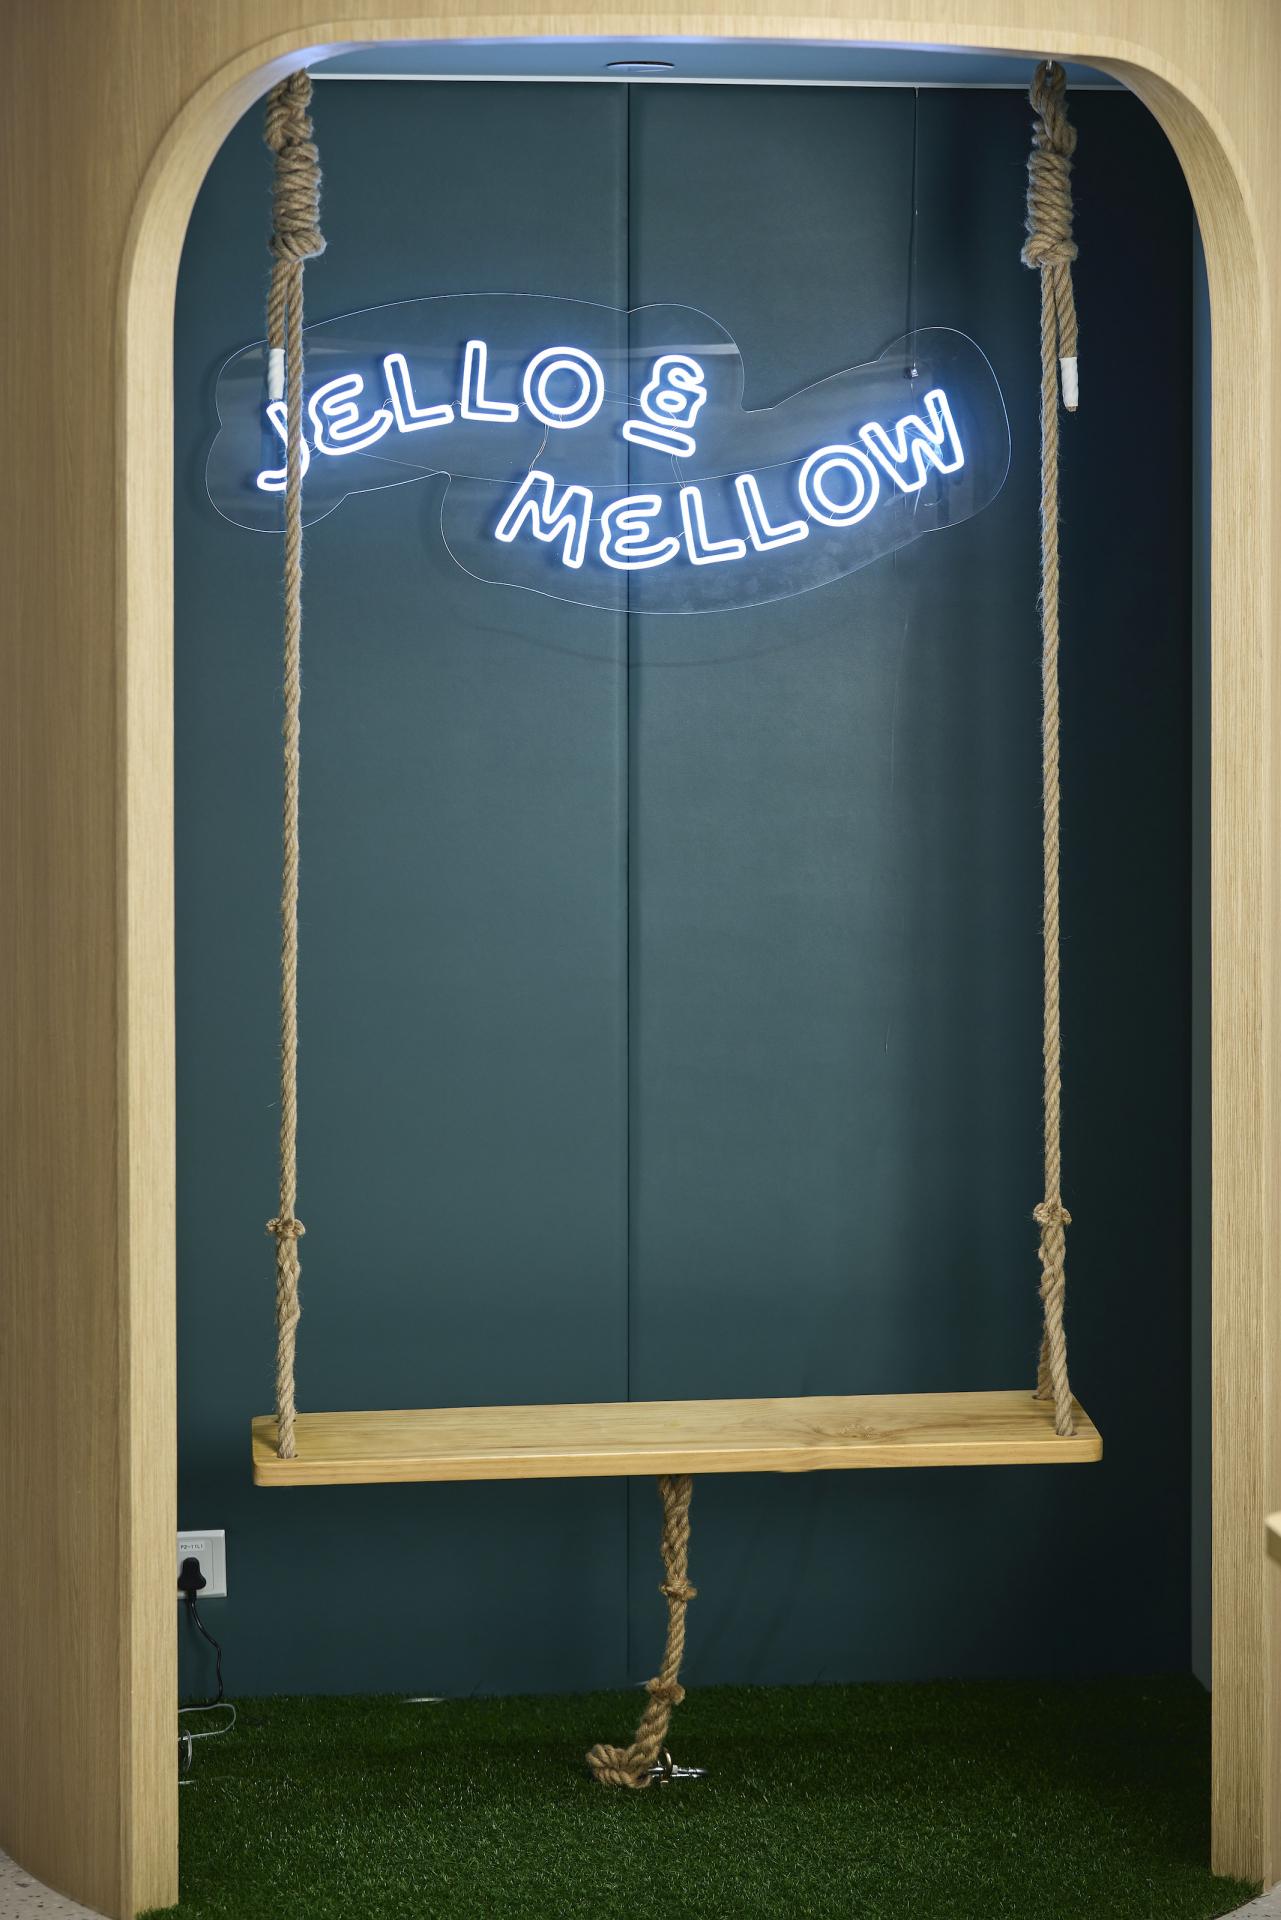 Jello & Mellow's Playhouse Café in Hong Kong: a Family-Friendly Haven with Nordic Aesthetics